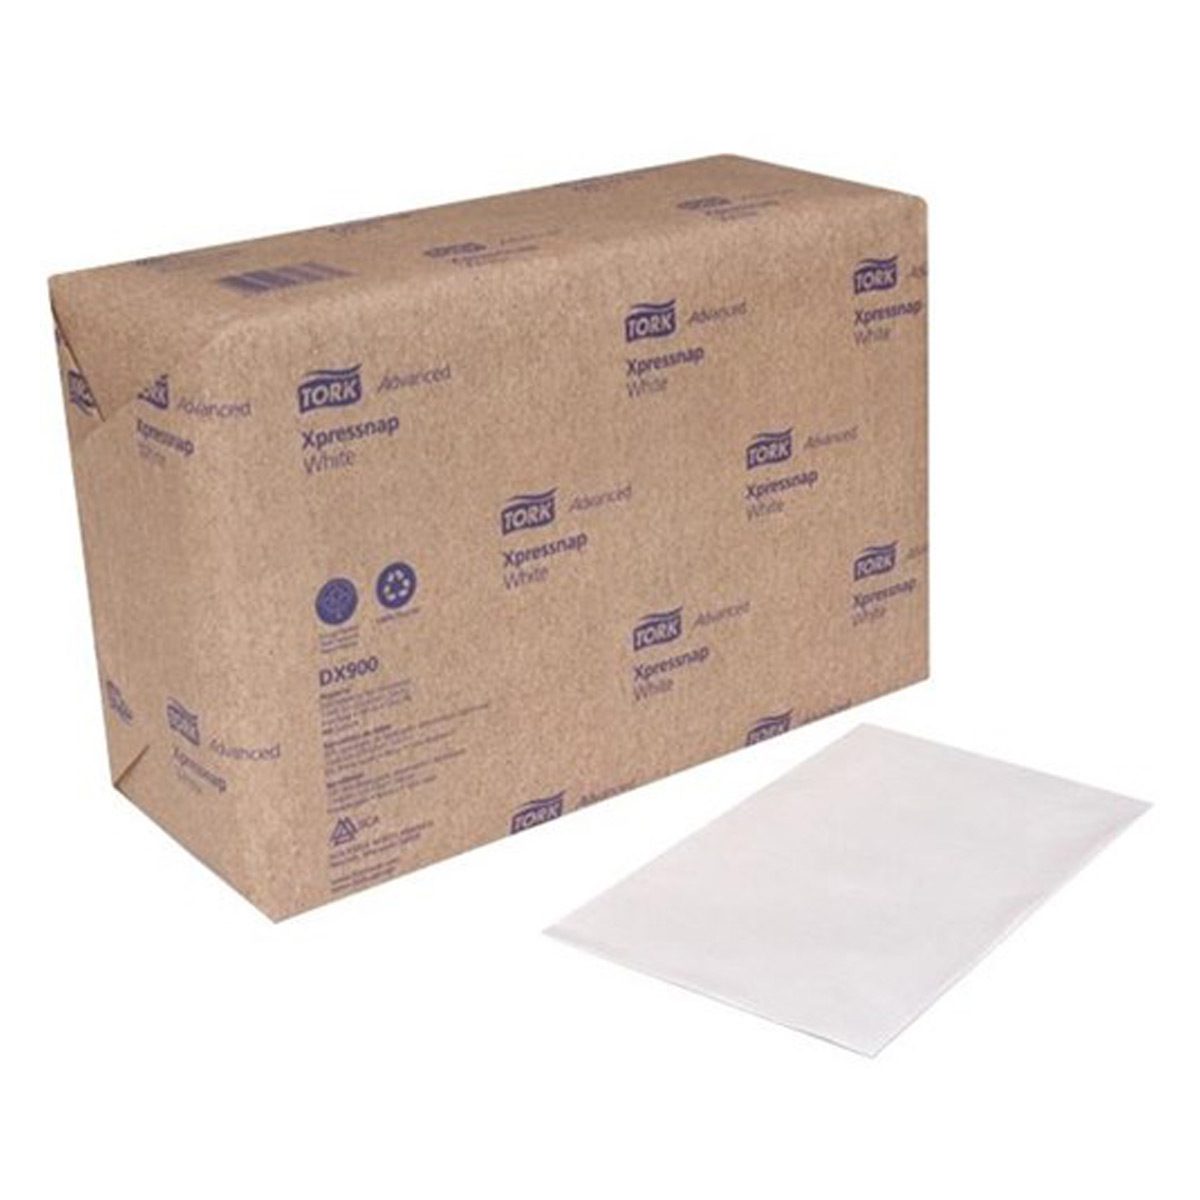 paper-products-paper-napkins-tork-xpressnap-napkin-white-6000-per-carton-1ply-500-napkins-12-packs-N4-reducing-usage-by-25%-guaranteed-one-at-a-time-dispensing-vjs-distributors-2310917